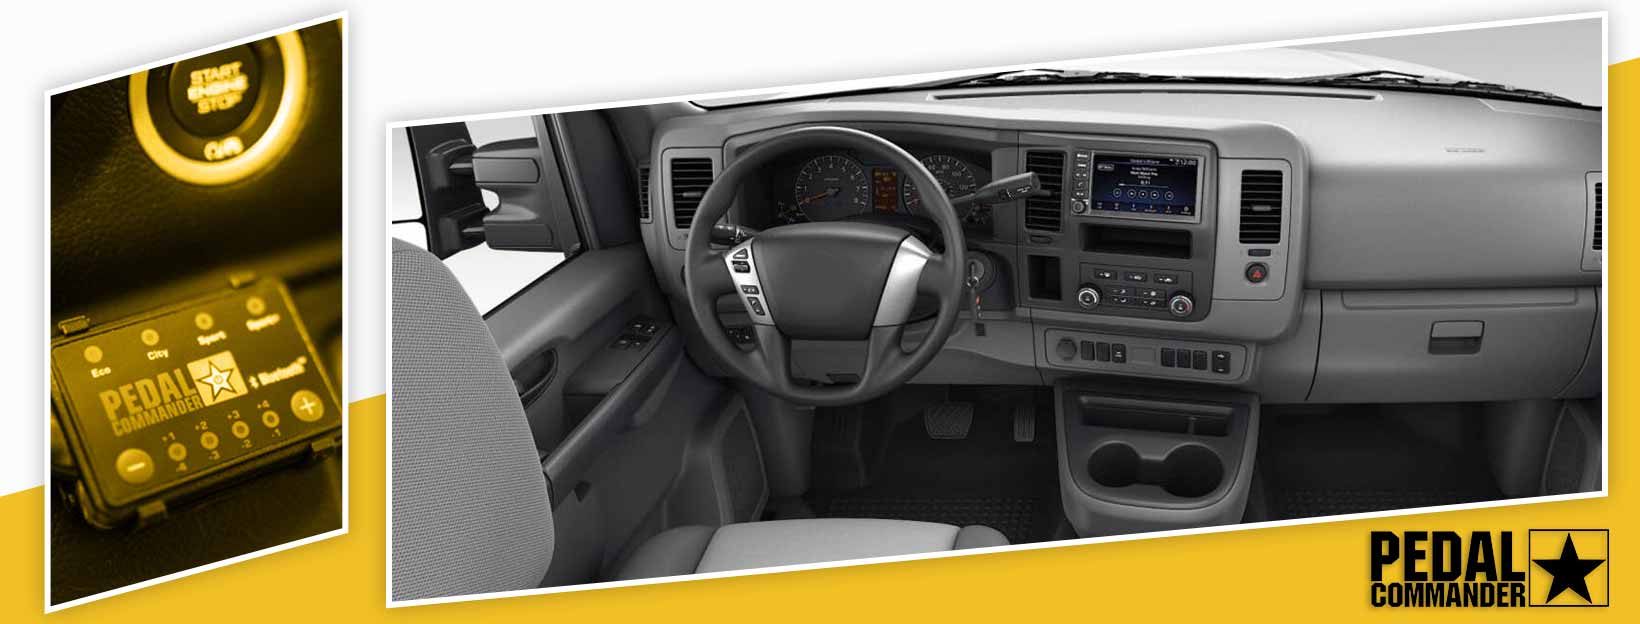 Pedal Commander for Nissan NV2500 - interior